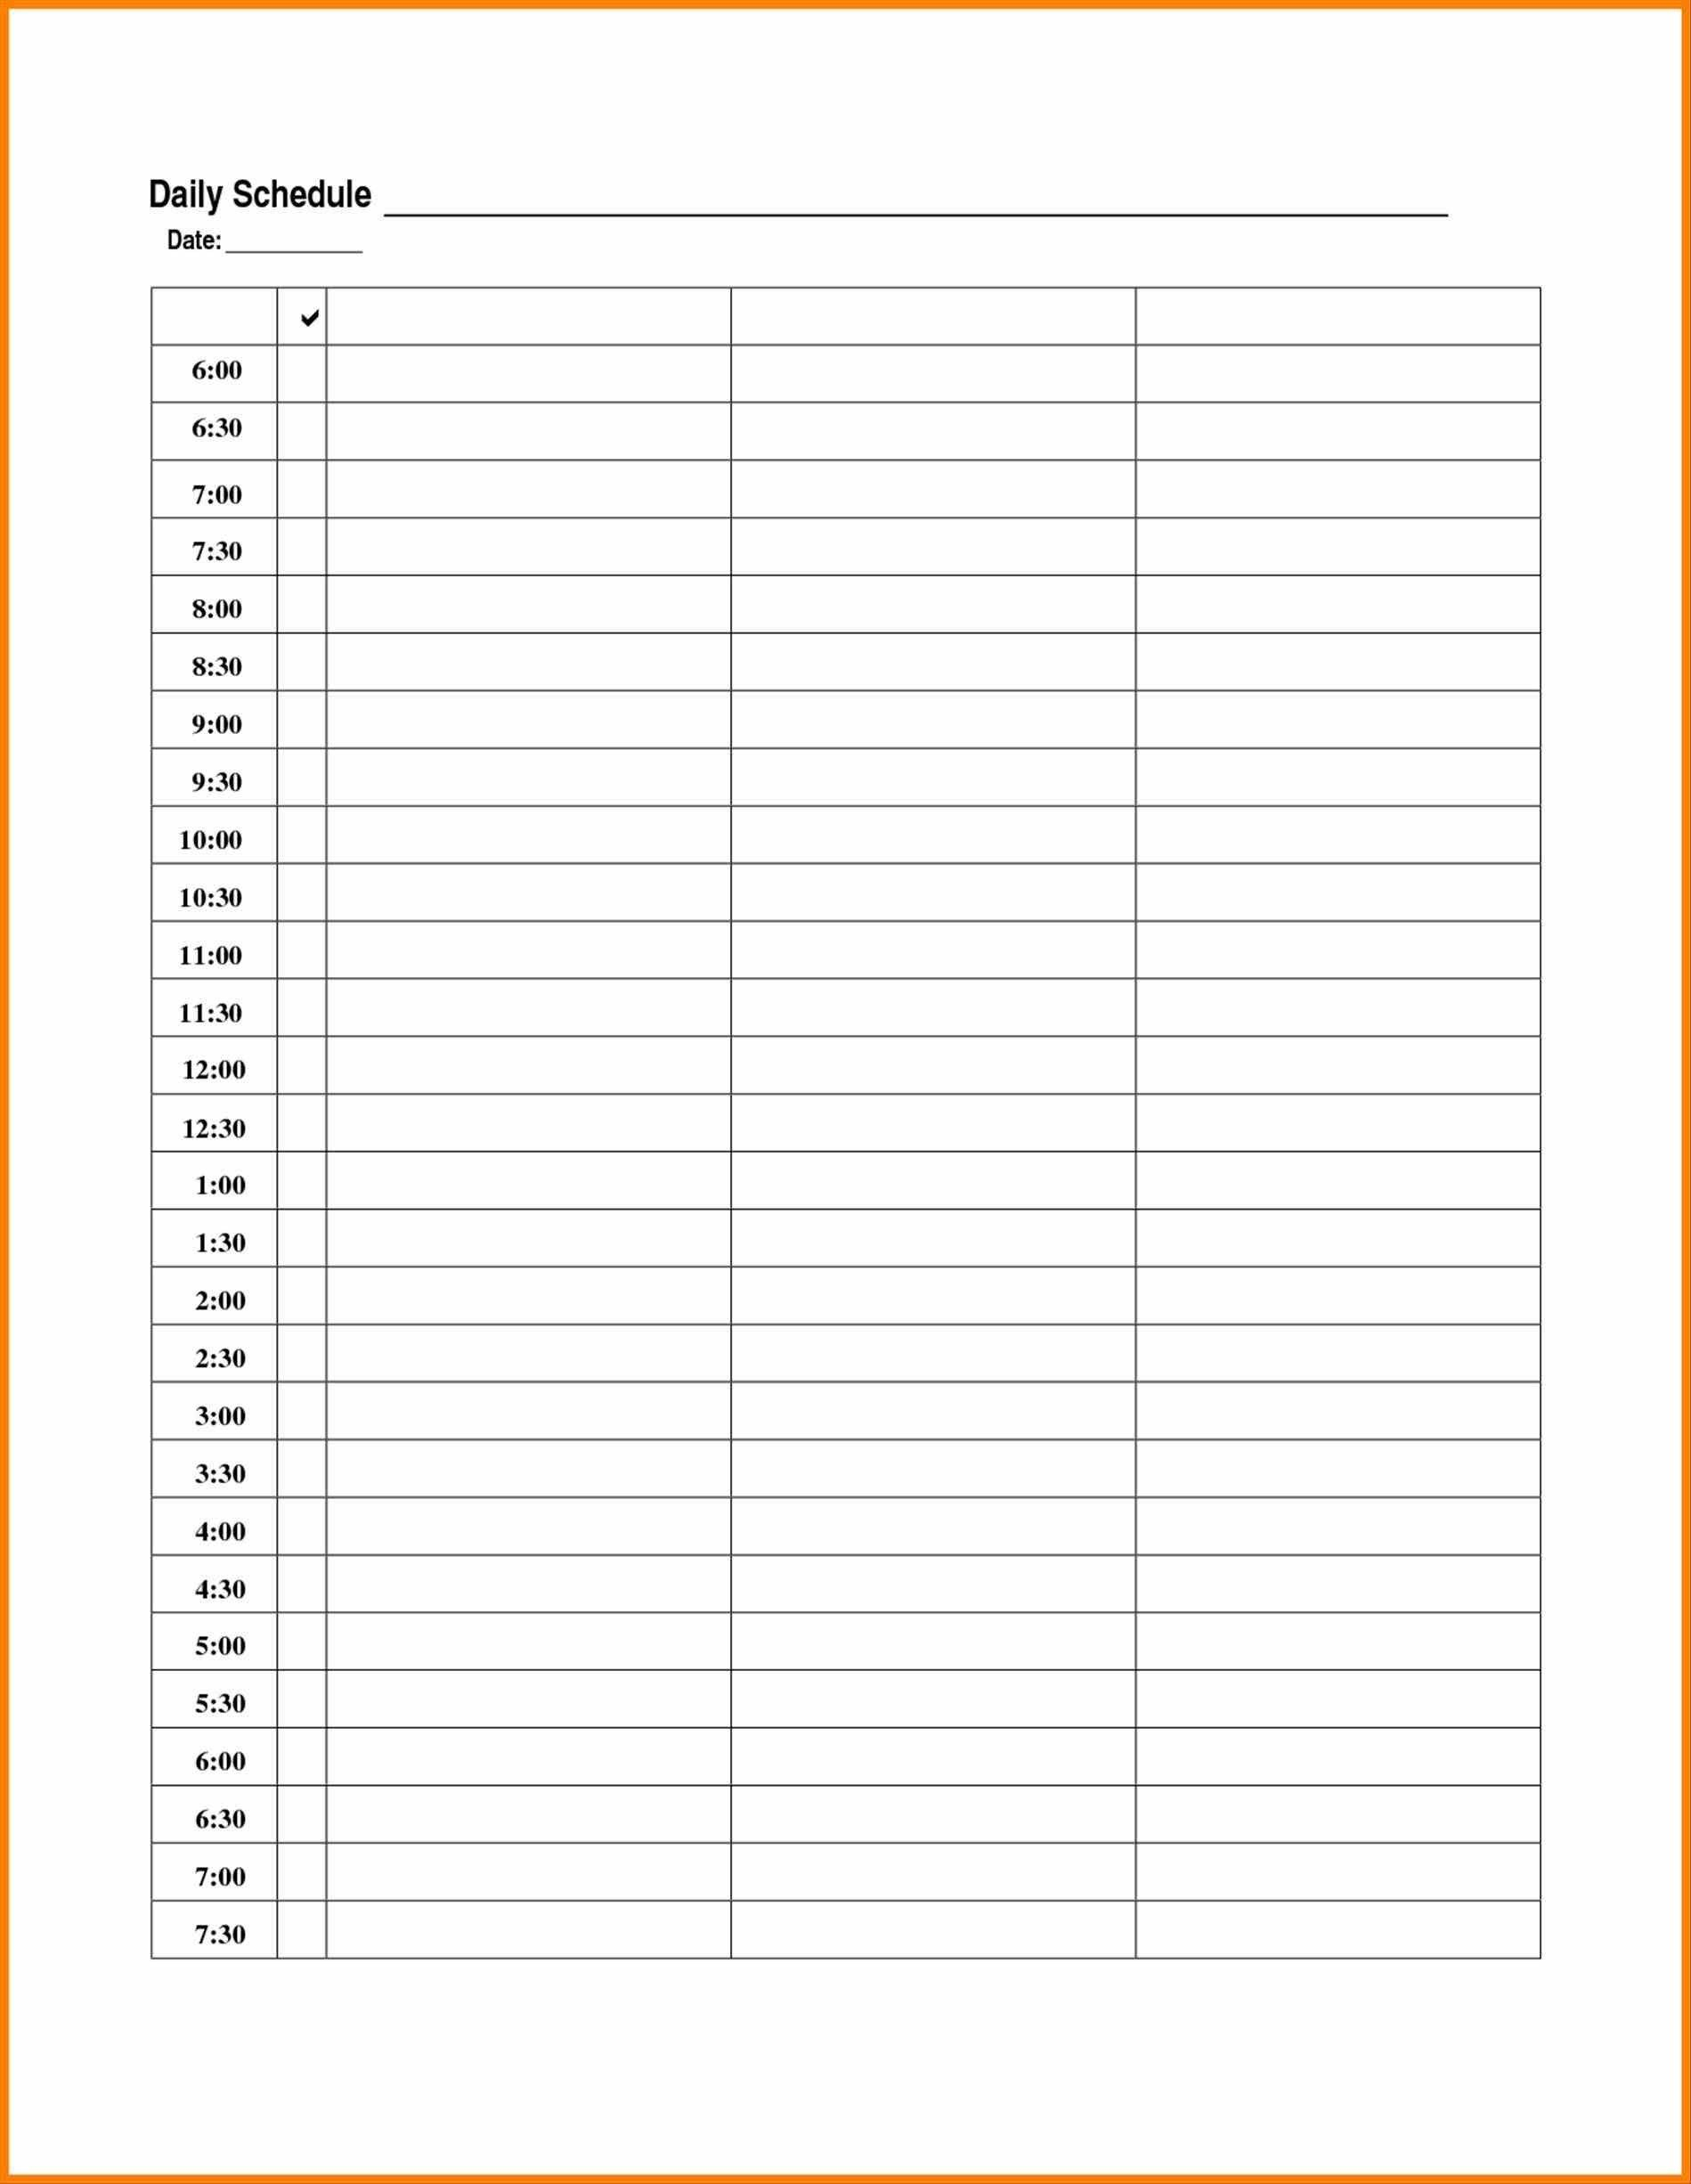 Daily Calendar Template | Excel Calendar Template, Daily with regard to 30 Days Calendar Template